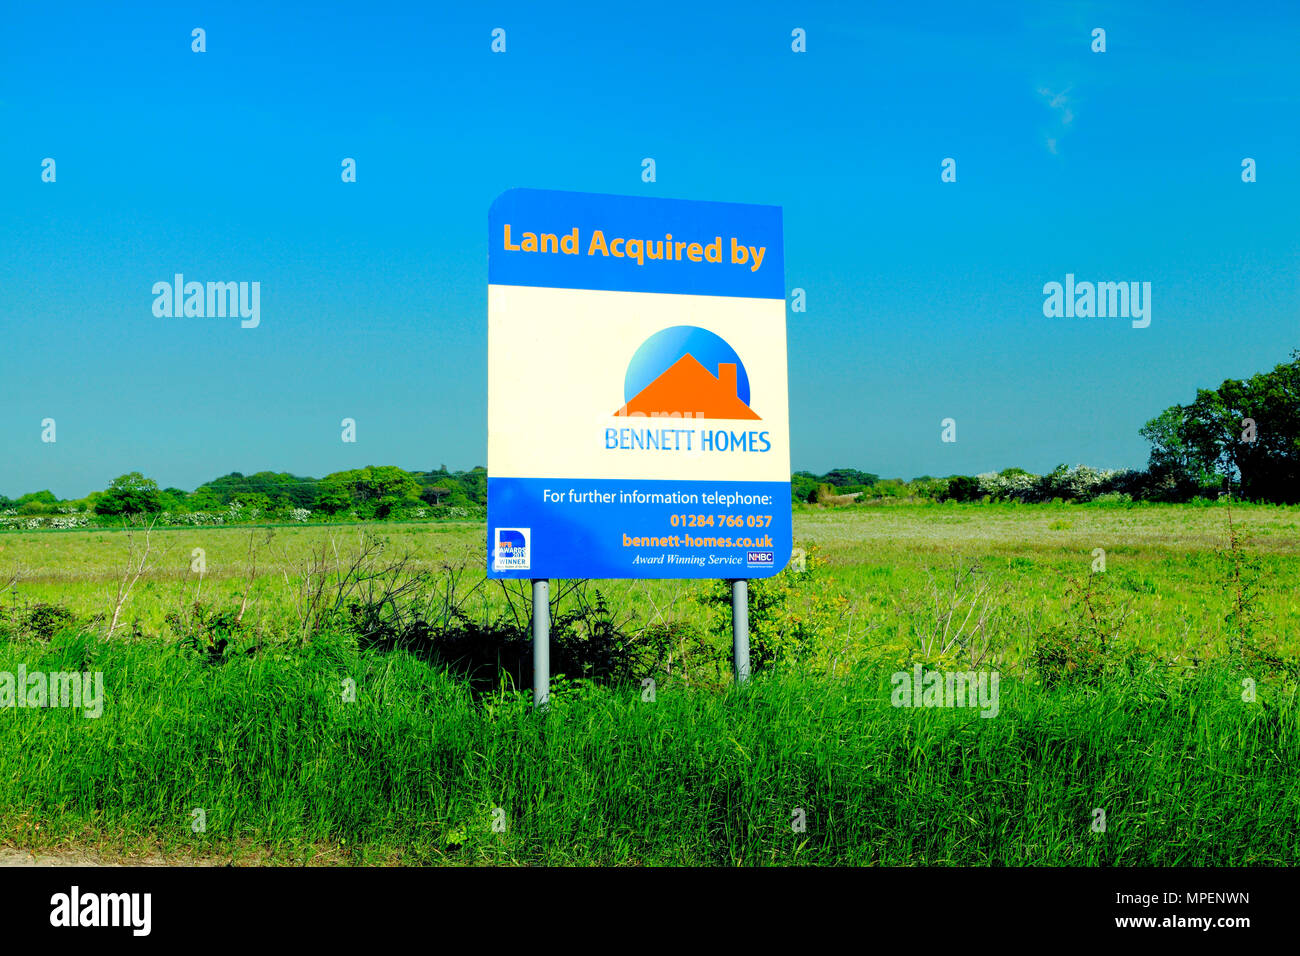 Bennett Homes, land acquisition, housing development, agricultural land, Hunstanton, sign, Norfolk, UK Stock Photo